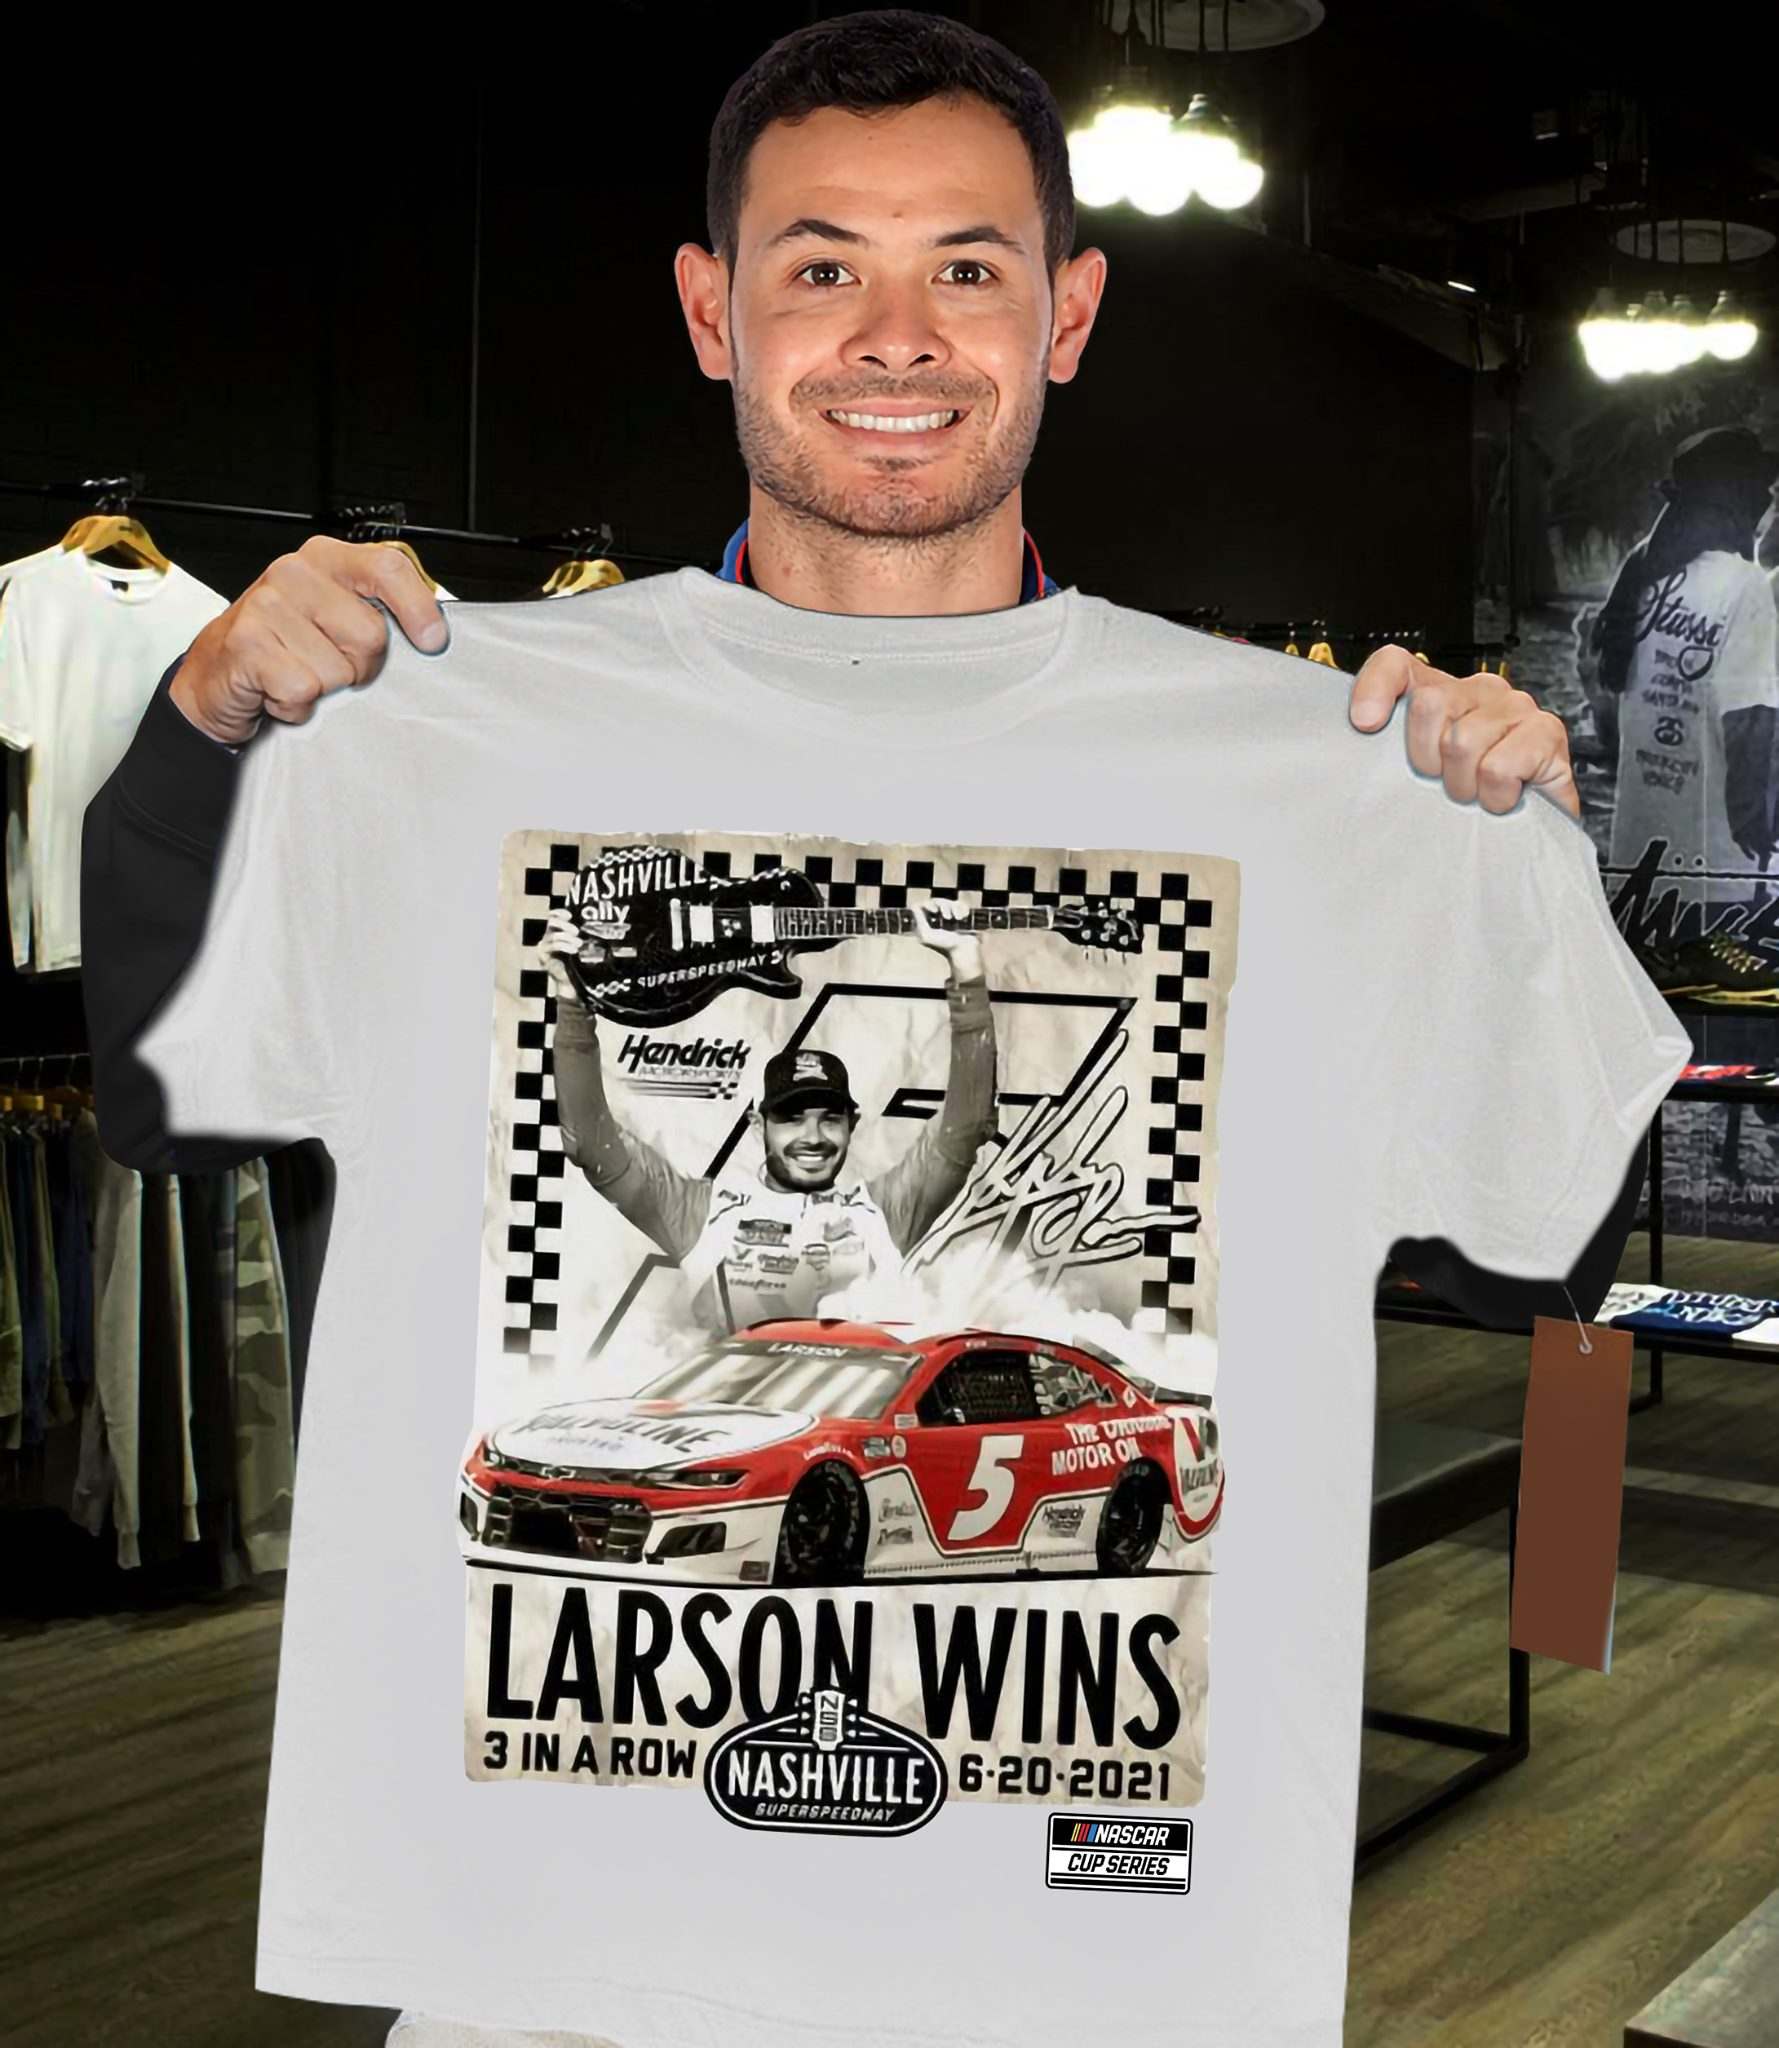 Jud Larson - Formula one racer, Larson professional racer